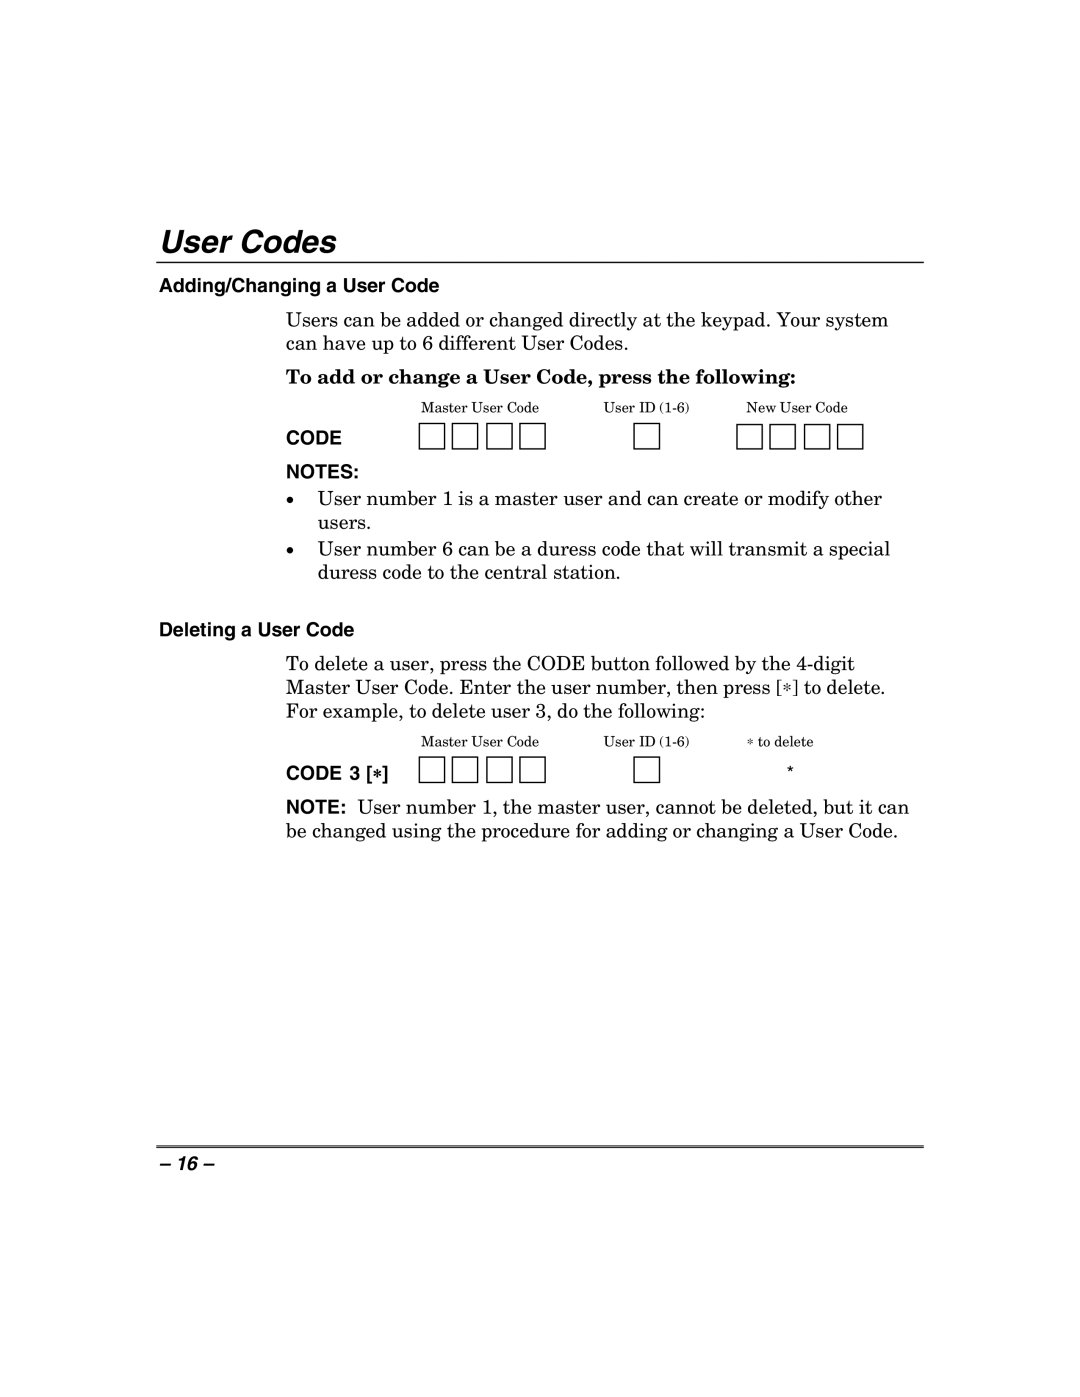 Honeywell 408EU manual User Codes, Adding/Changing a User Code, Deleting a User Code, Code 3 ∗ 